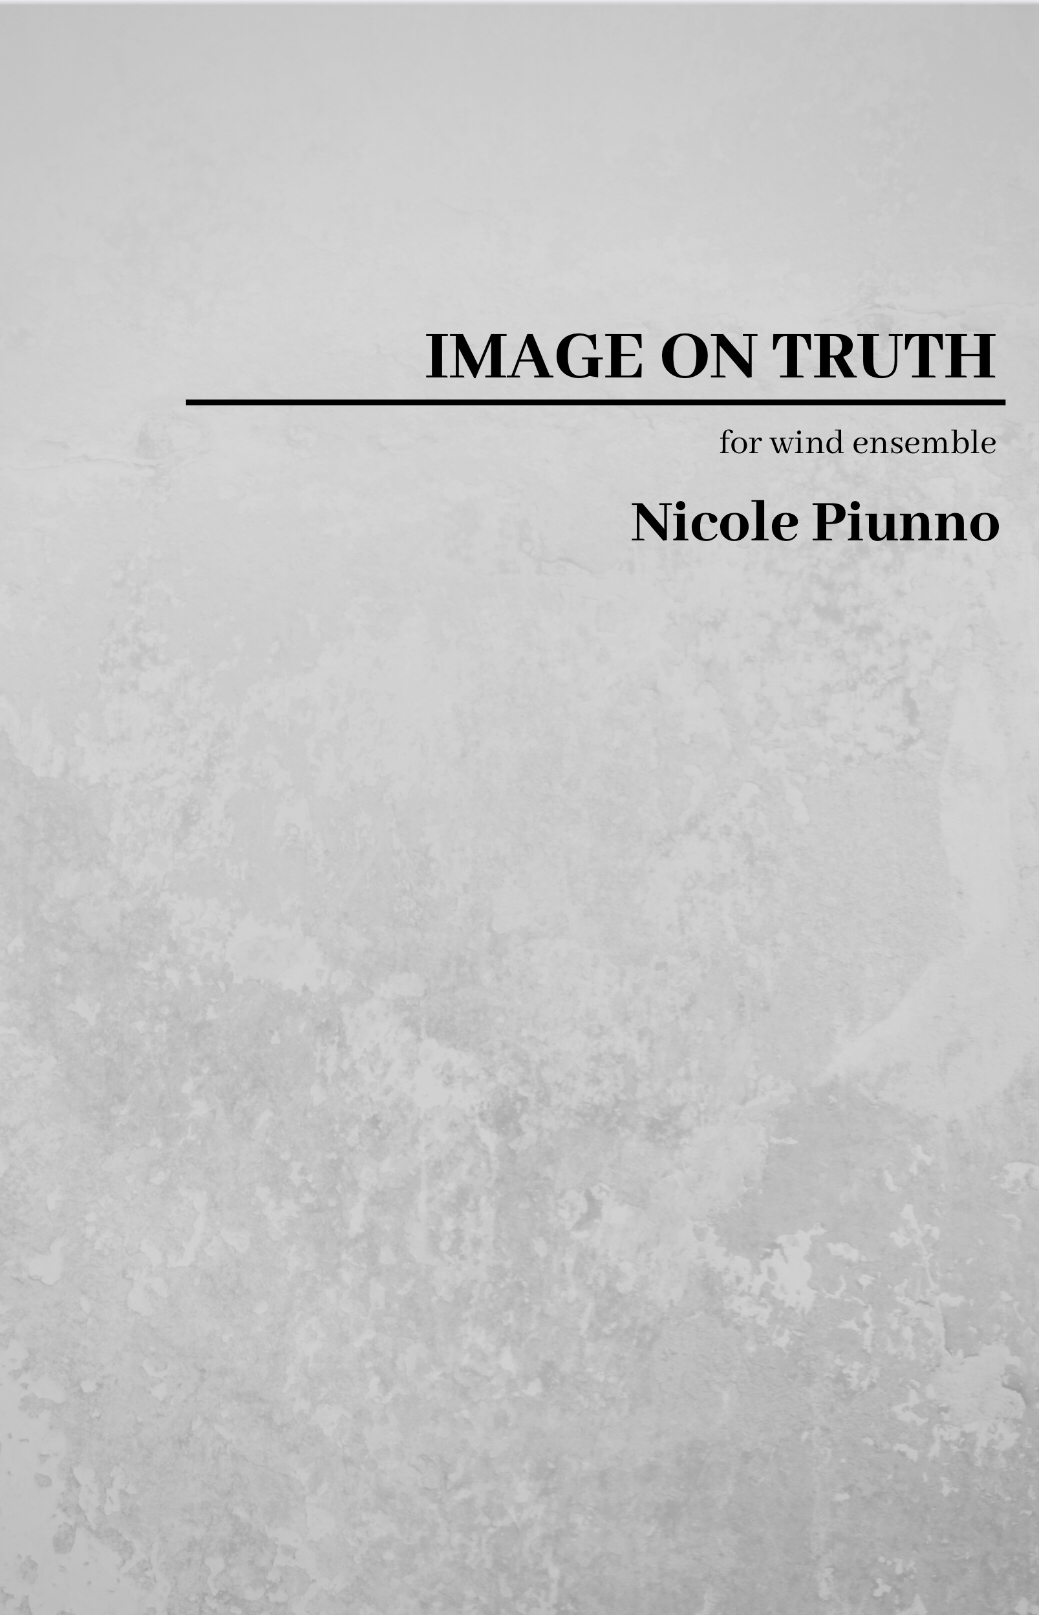 Image On Truth by Nicole Piunno